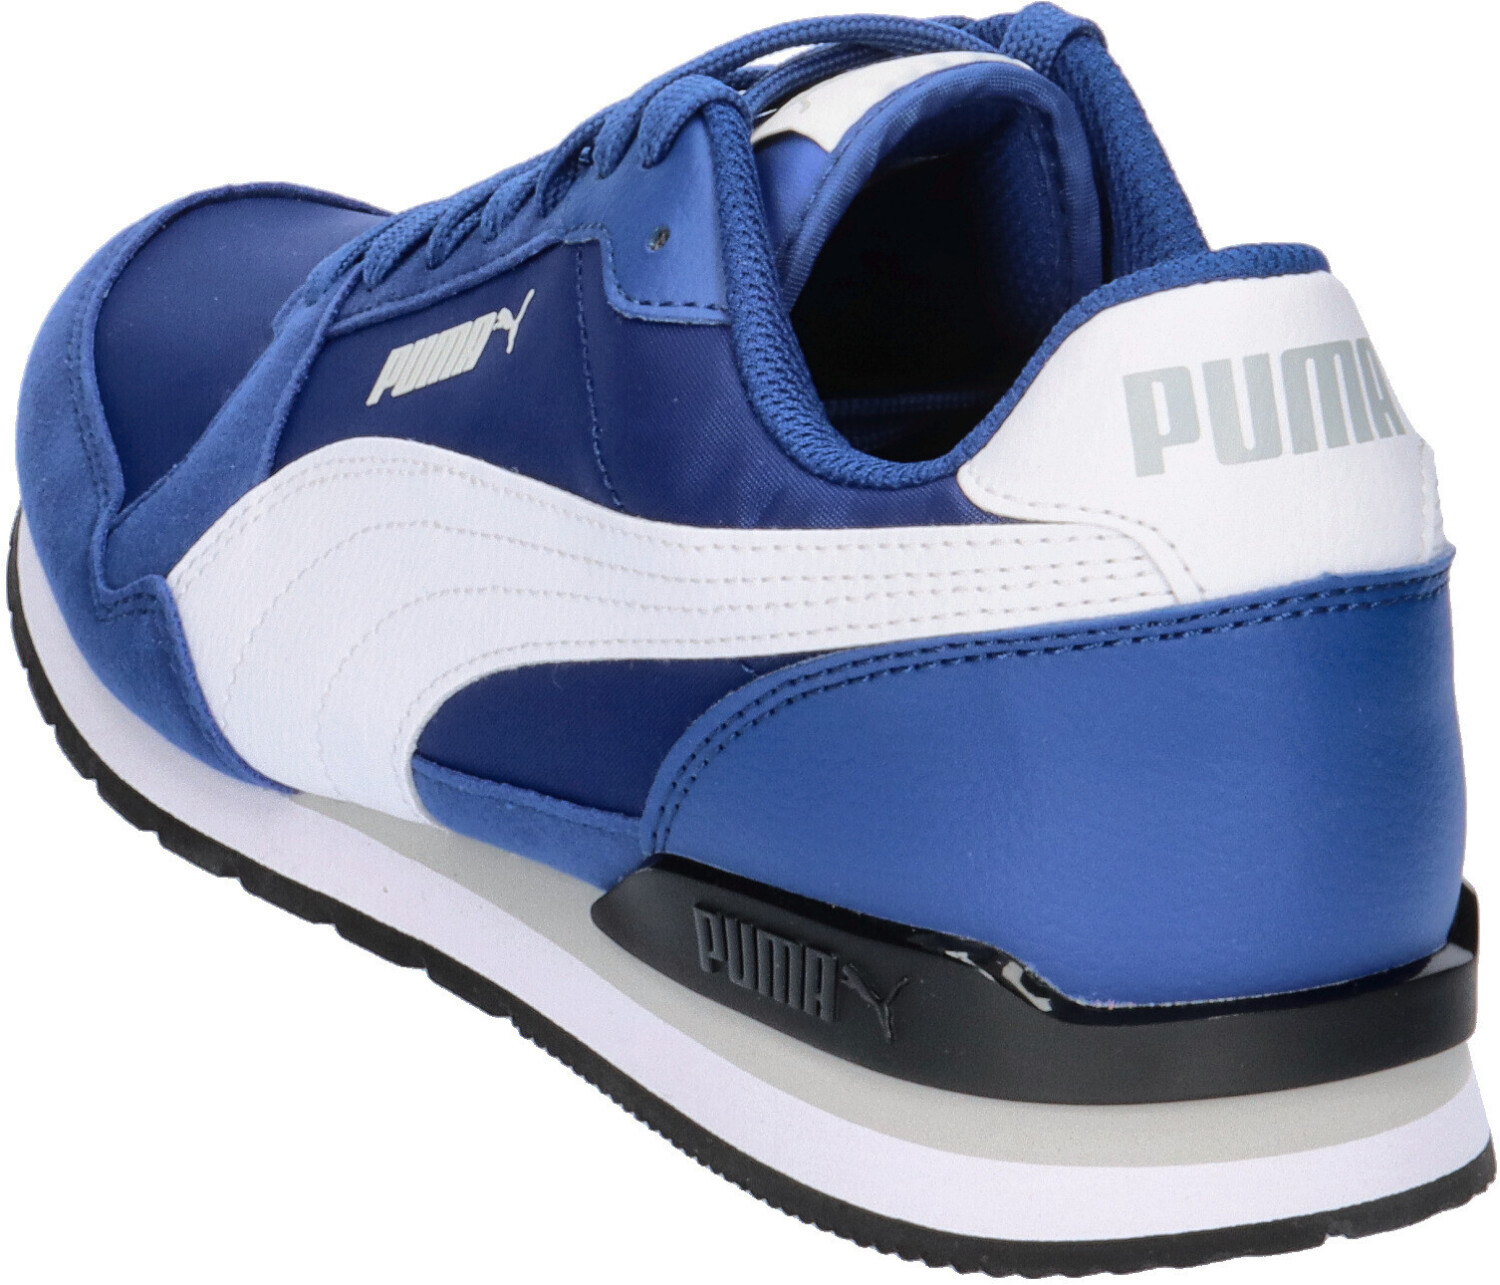 Puma St Runner V3 Nl | 384857 € 58,99 16 Preisvergleich ab bei navy